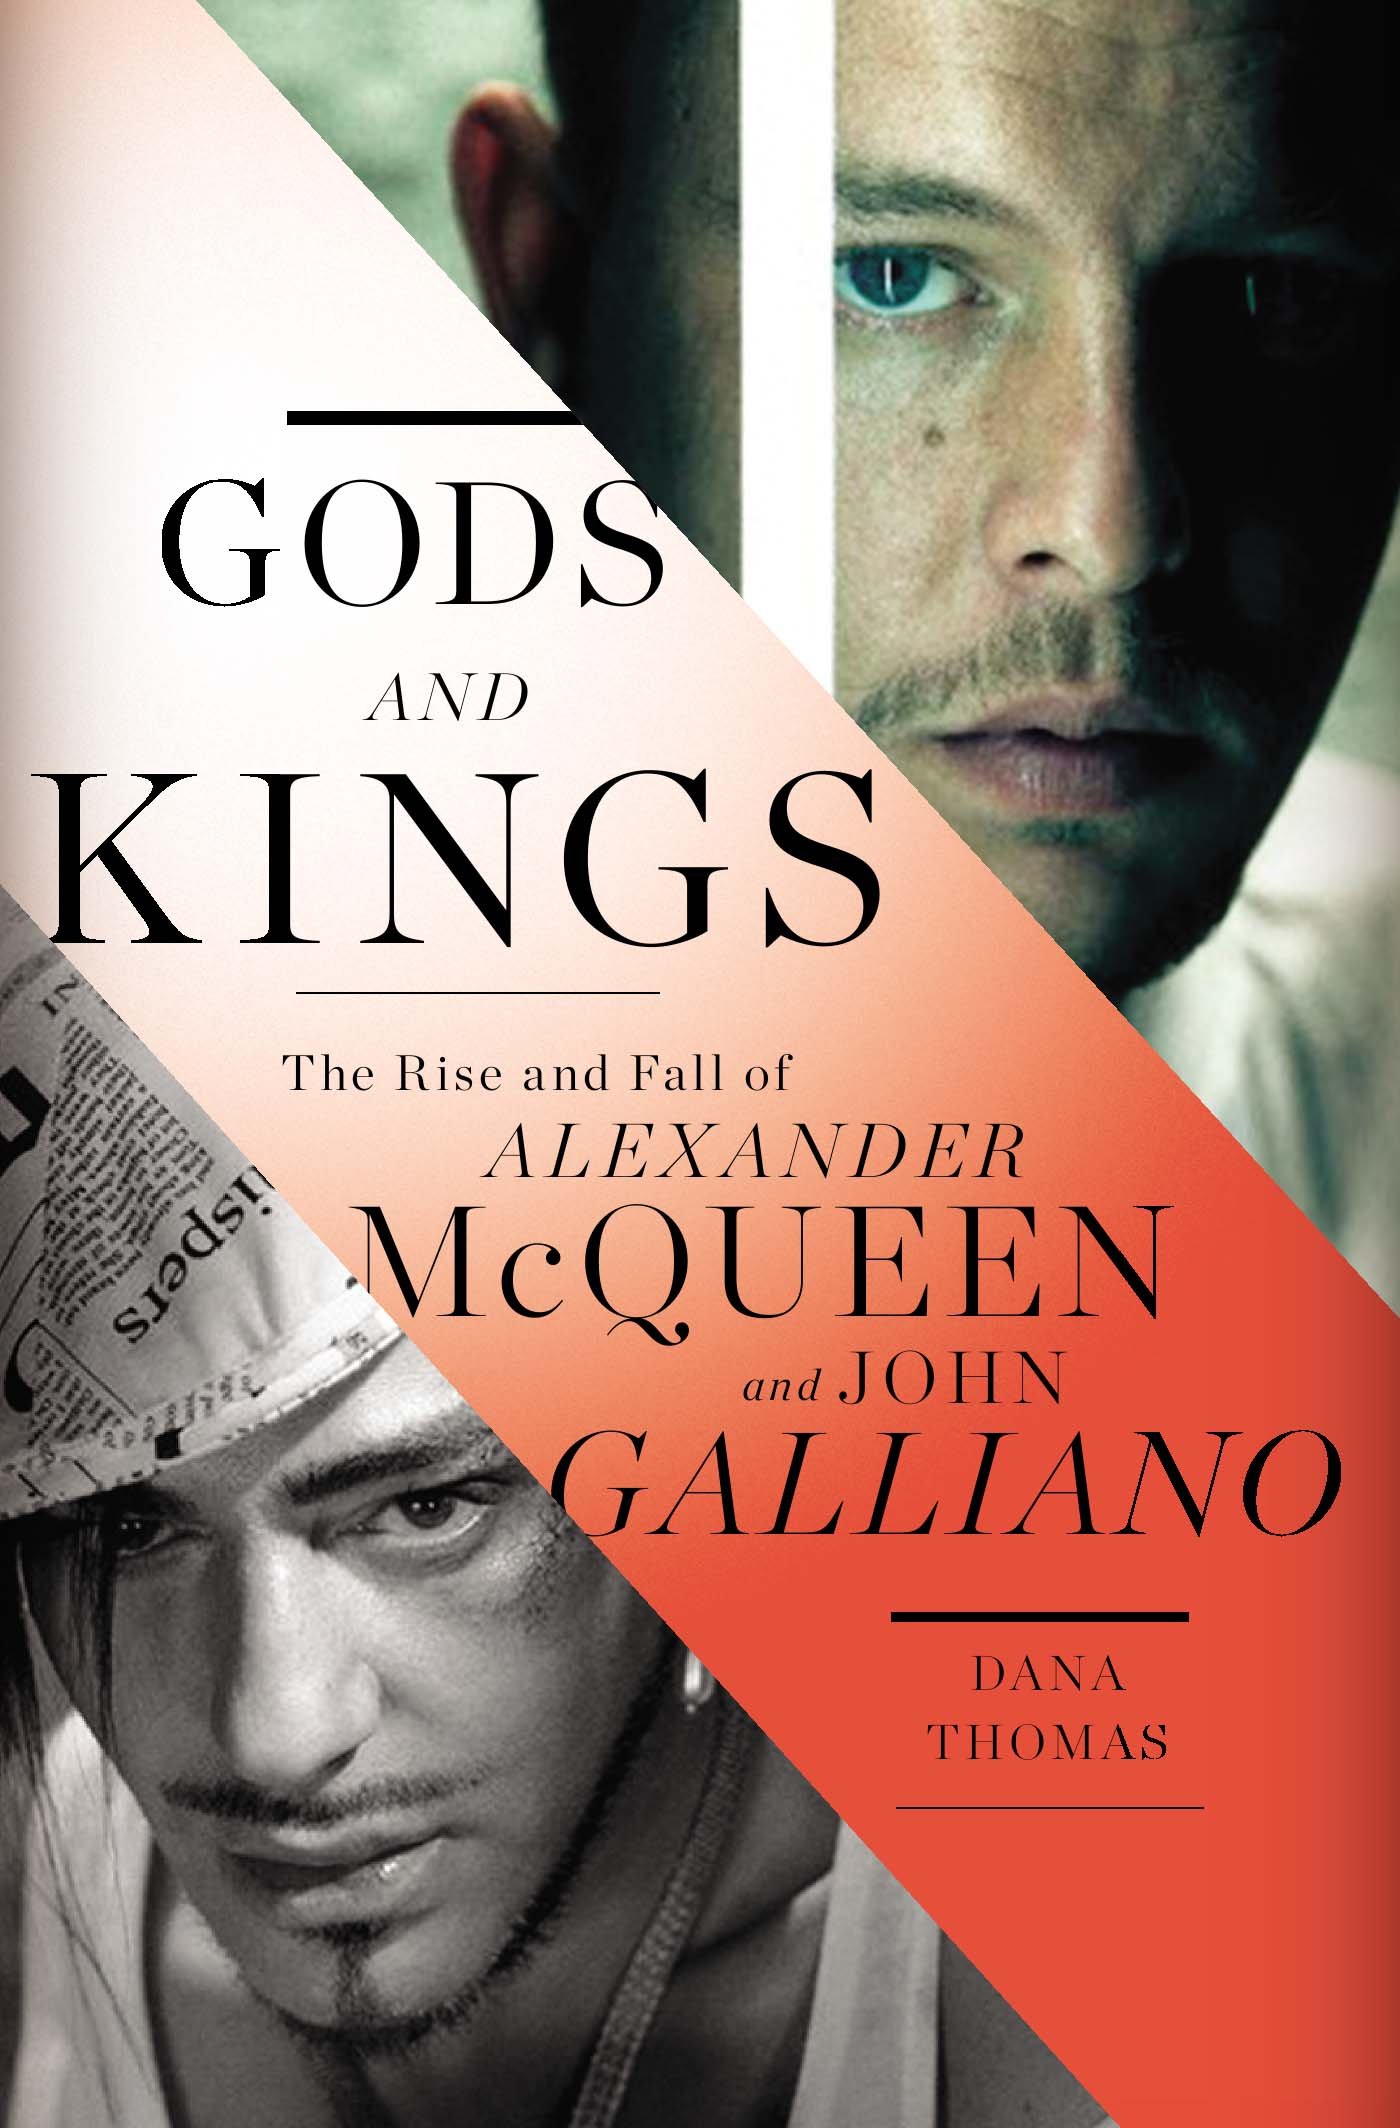 “Gods and Kings: The rise and fall of Alexander McQueen and John Galliano”, el nuevo libro estrella de la moda